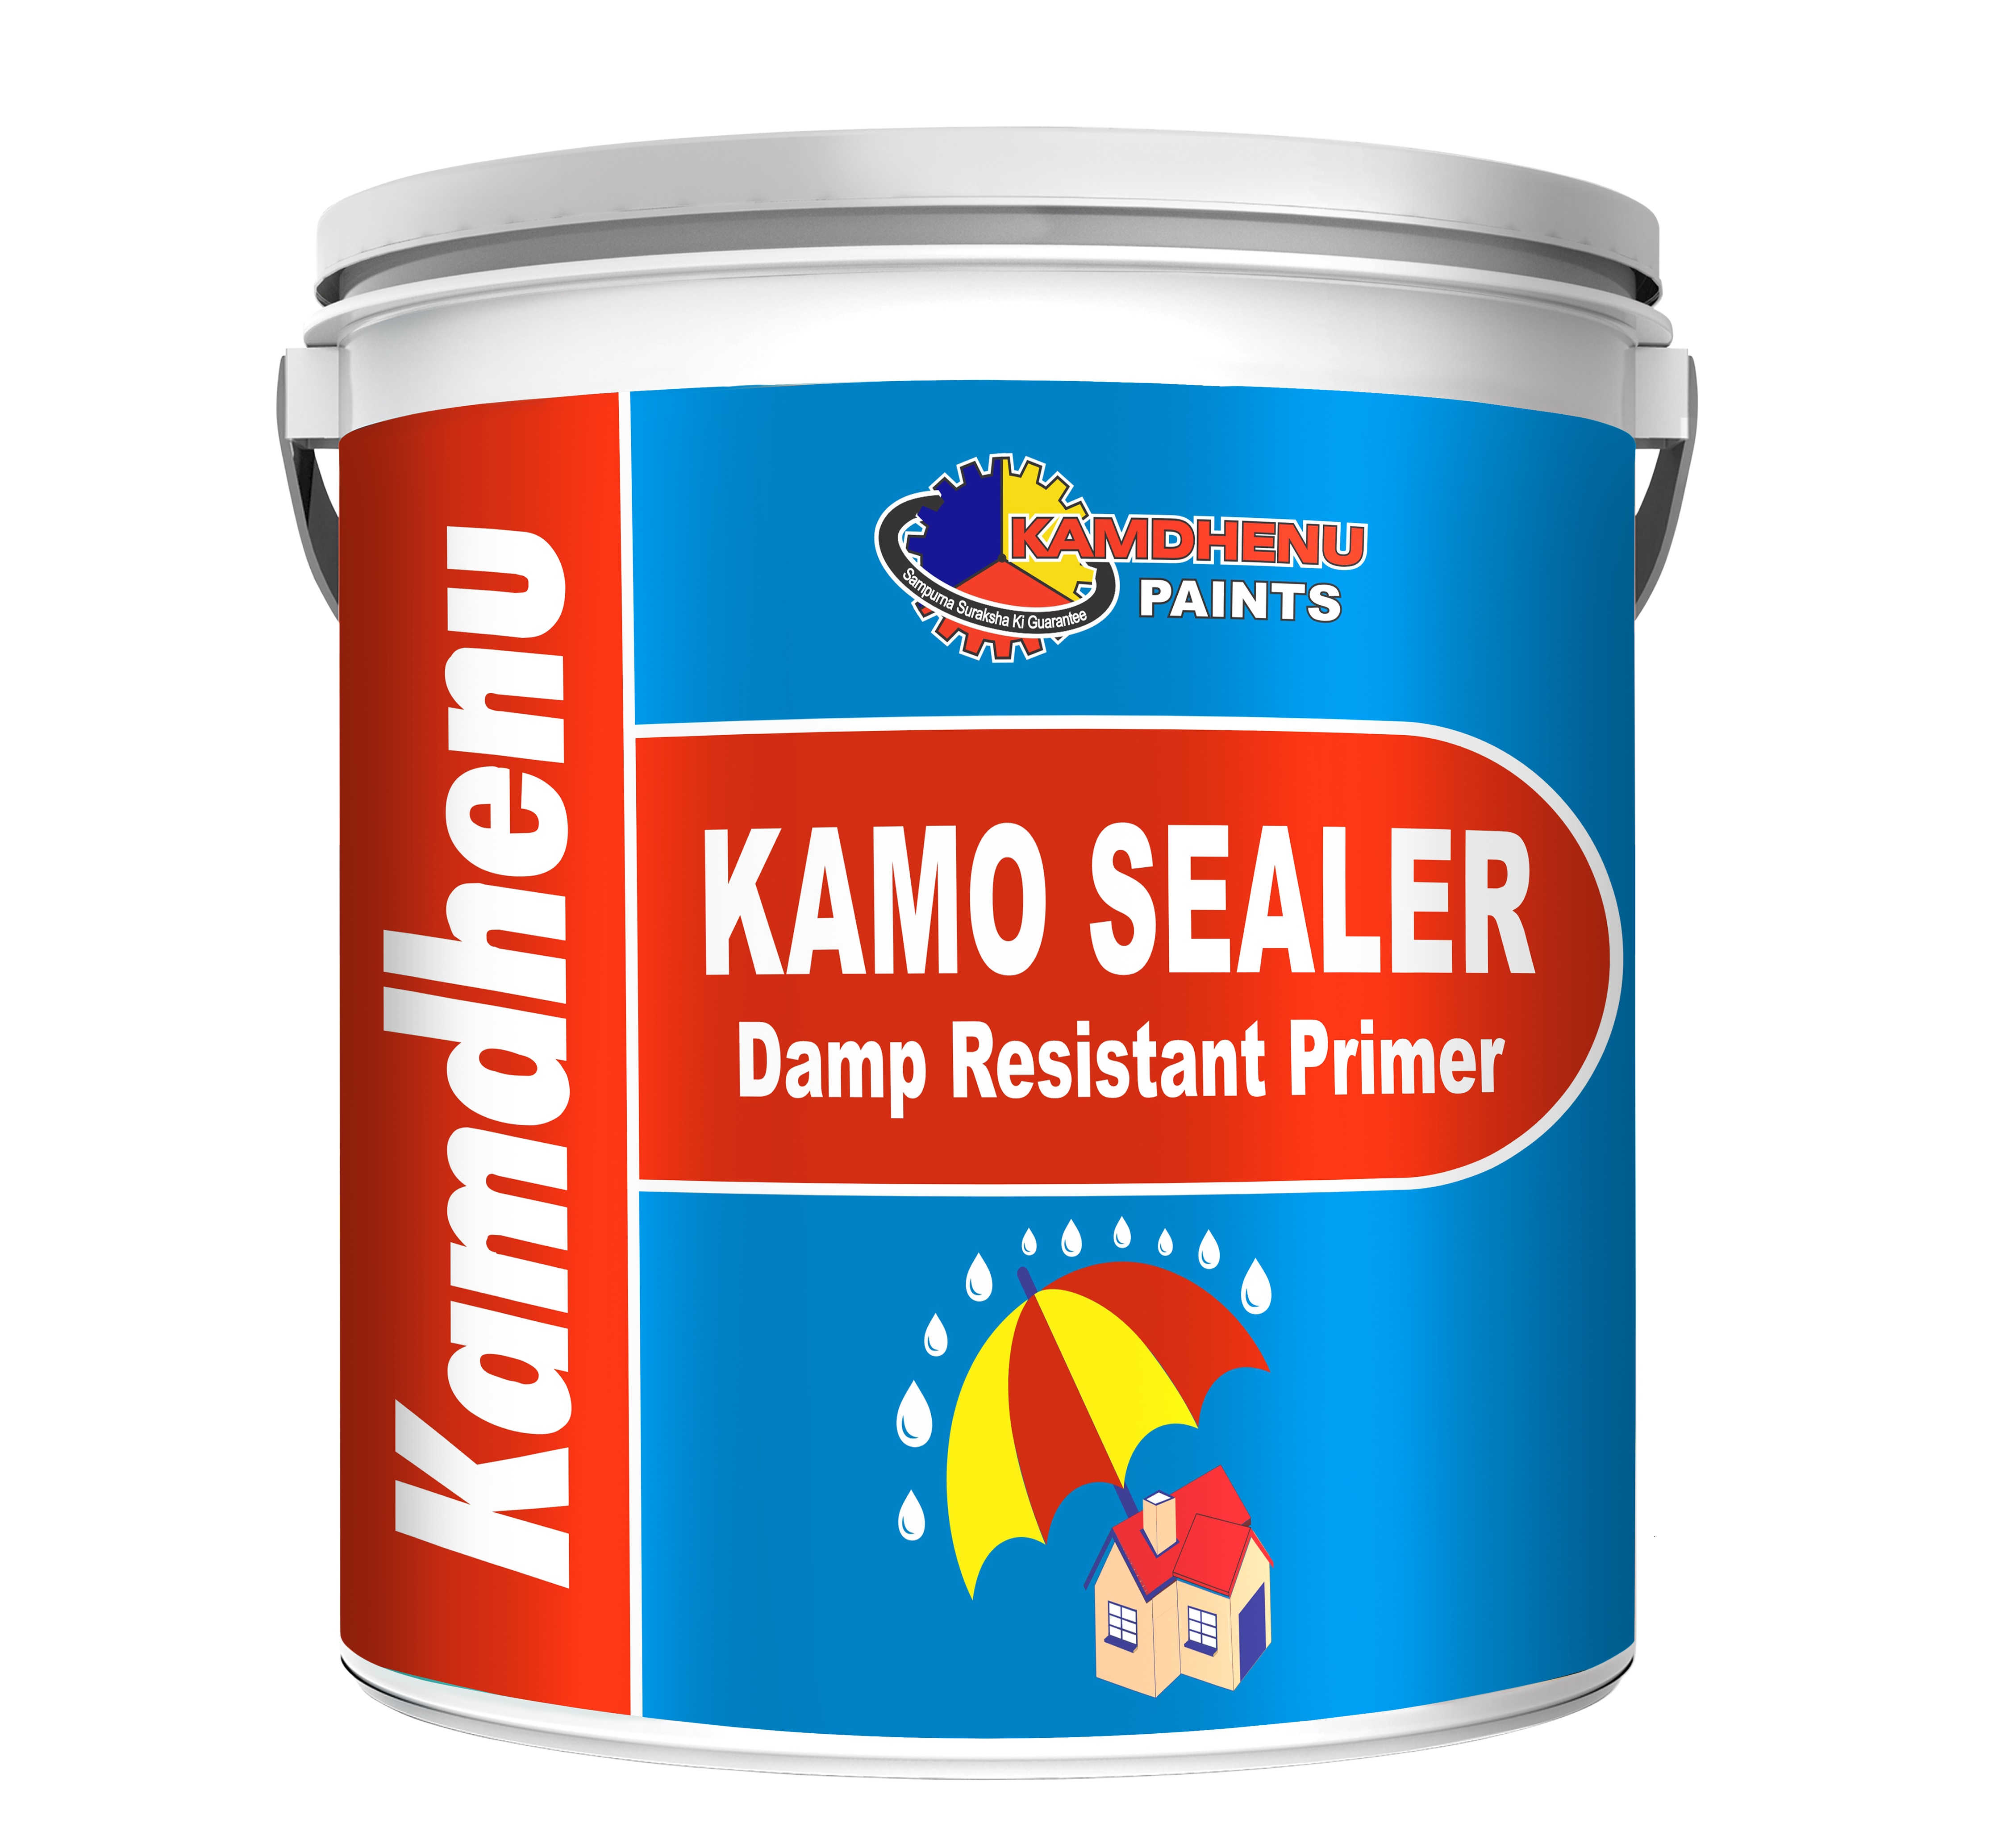 Kamo Sealer